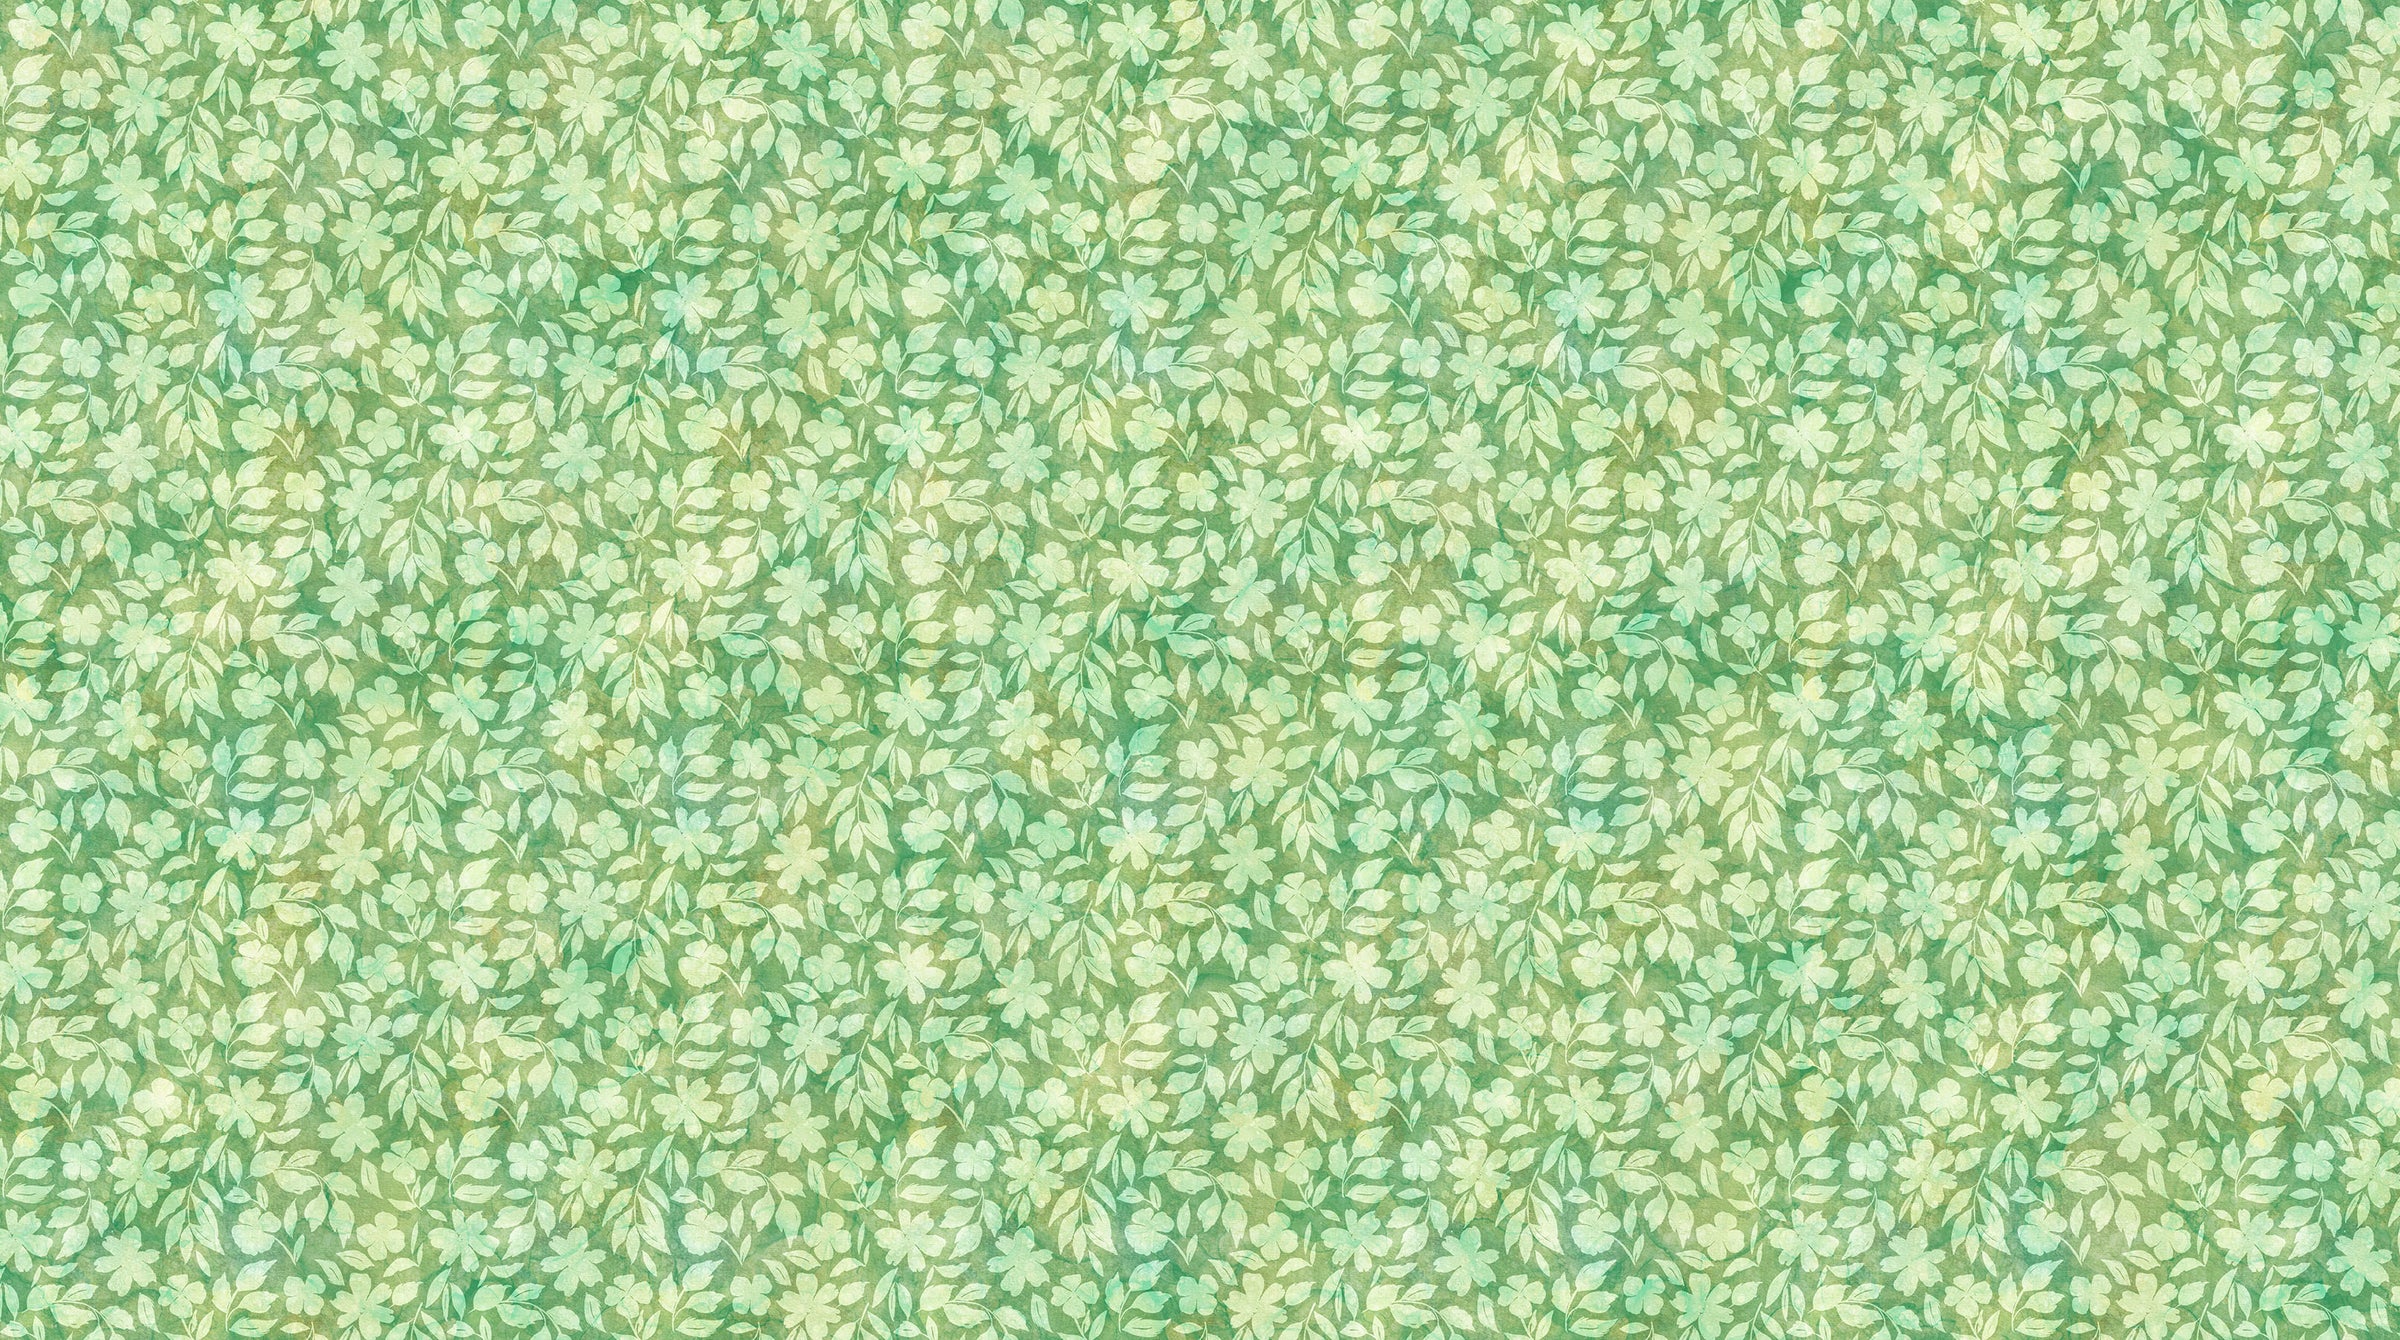 Sweet Surrender Quilt Fabric - Floral Blender in Green - 26952-73